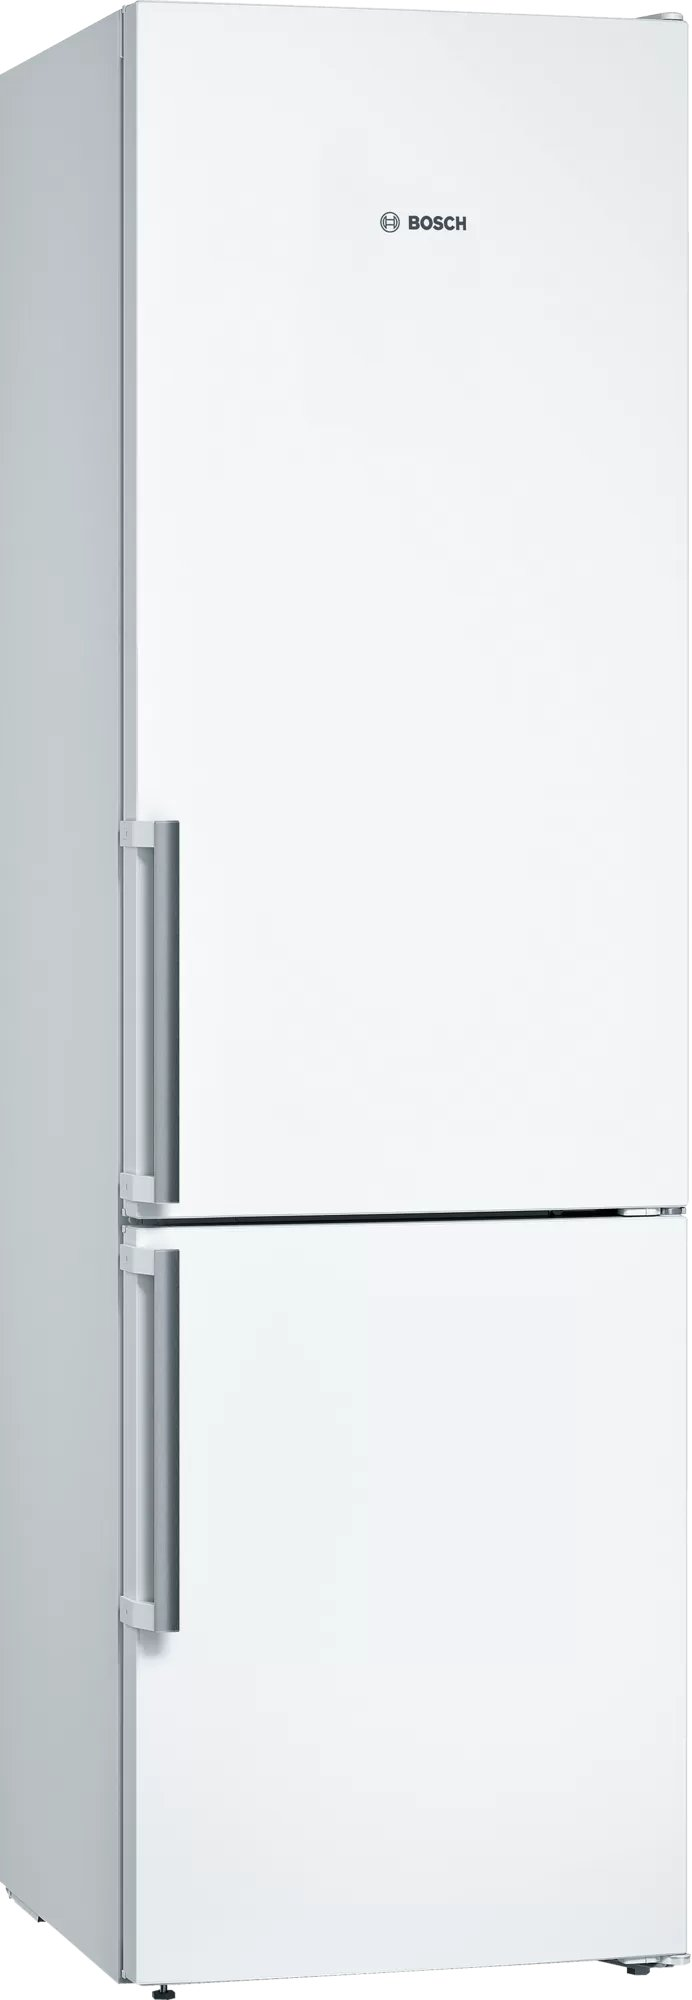 Холодильник Bosch KGN39VWEQ белый двухкамерный холодильник bosch kgn56ci30u